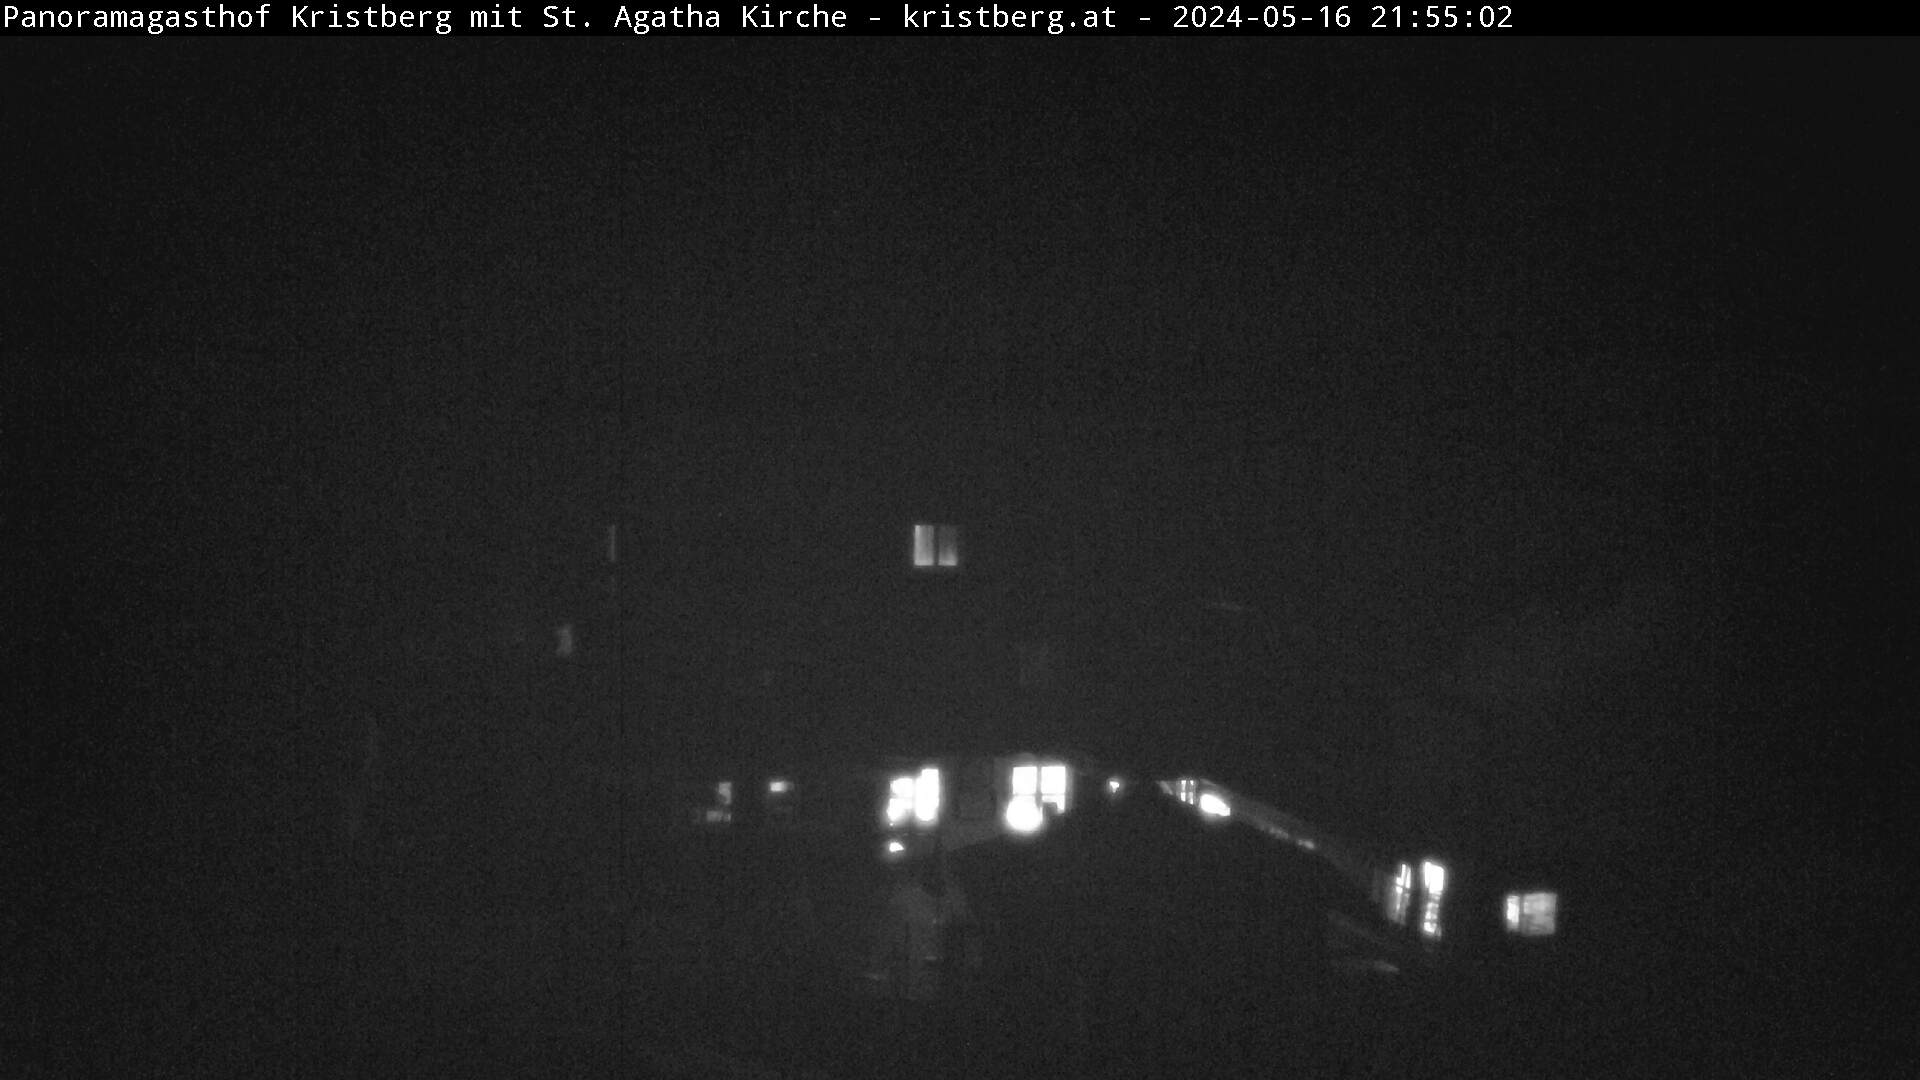 Webcam view towards St. Agatha Kapelle